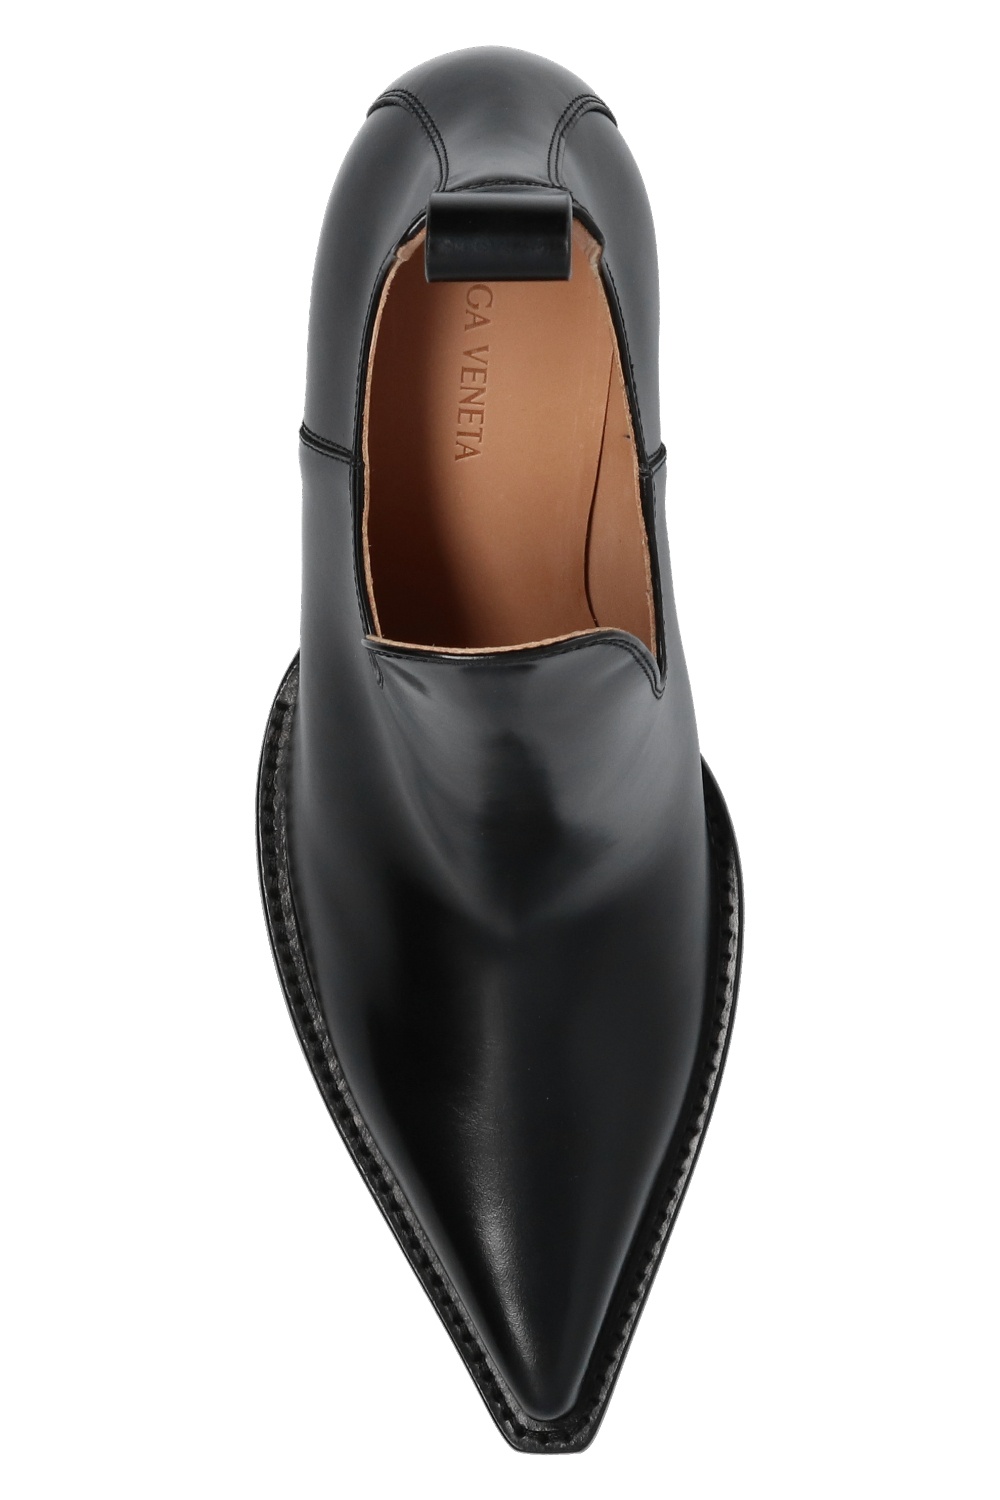 Bottega Veneta ‘BV Lean’ heeled ankle boots